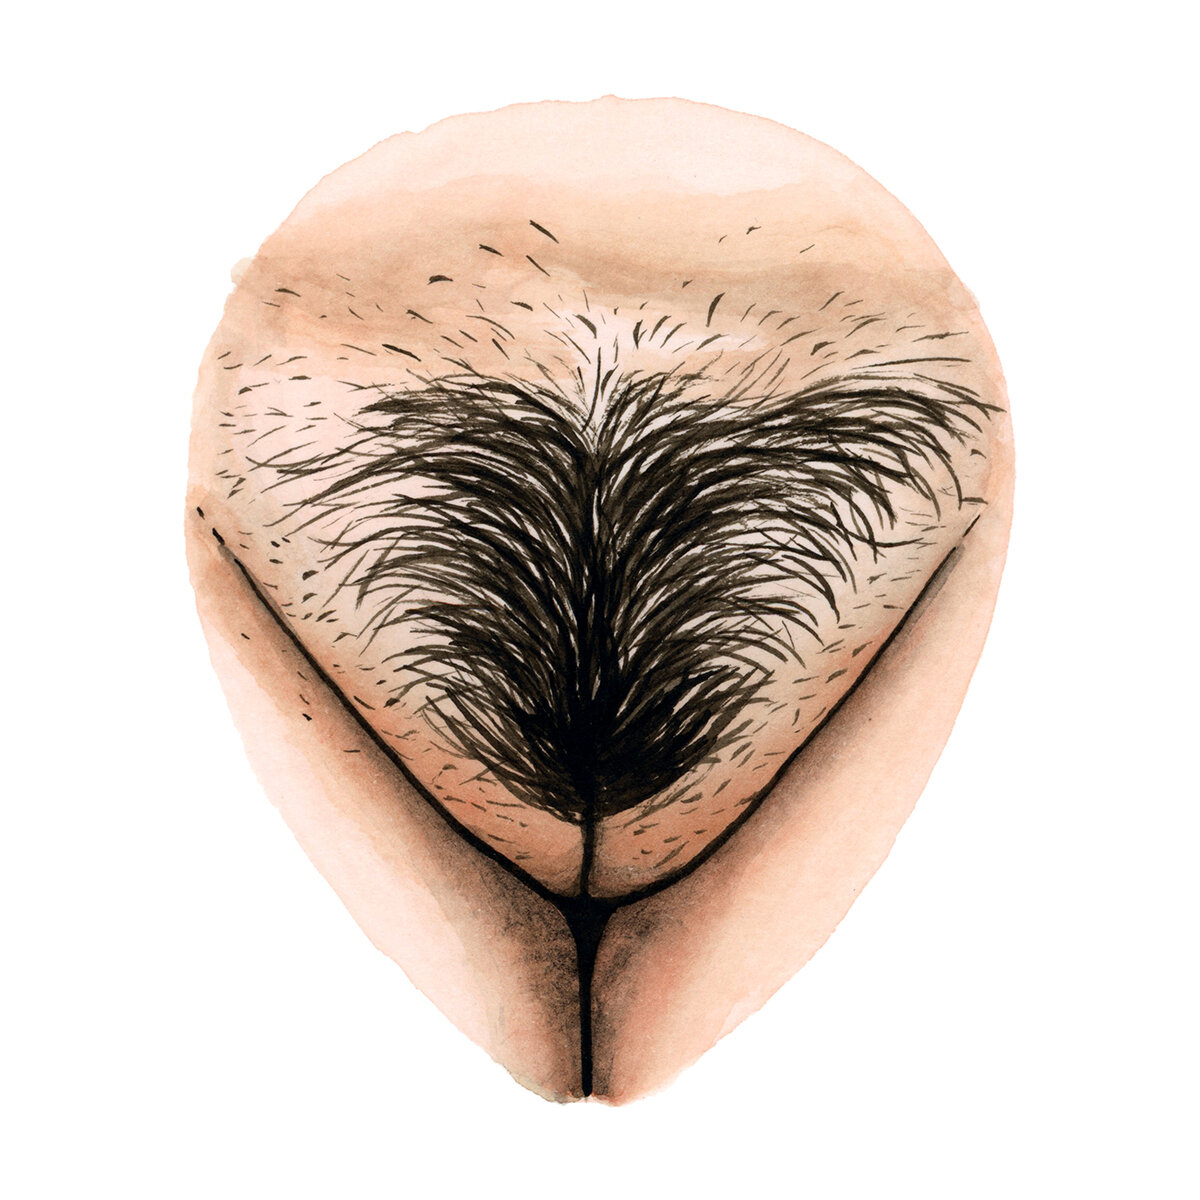 Pubic hair stories — The Vulva Gallery